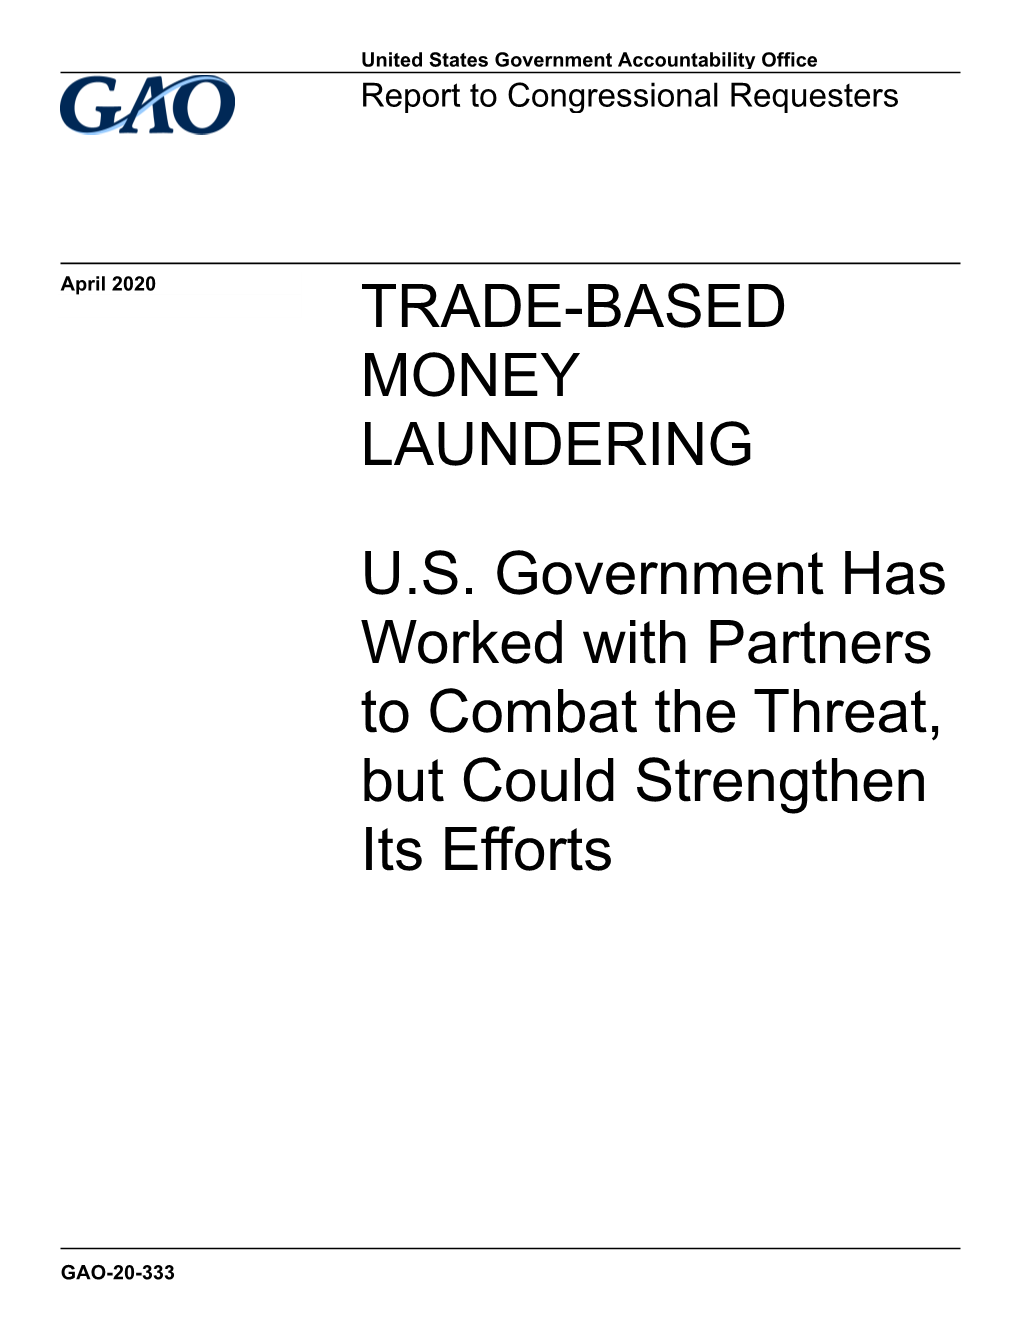 Gao-20-333, Trade-Based Money